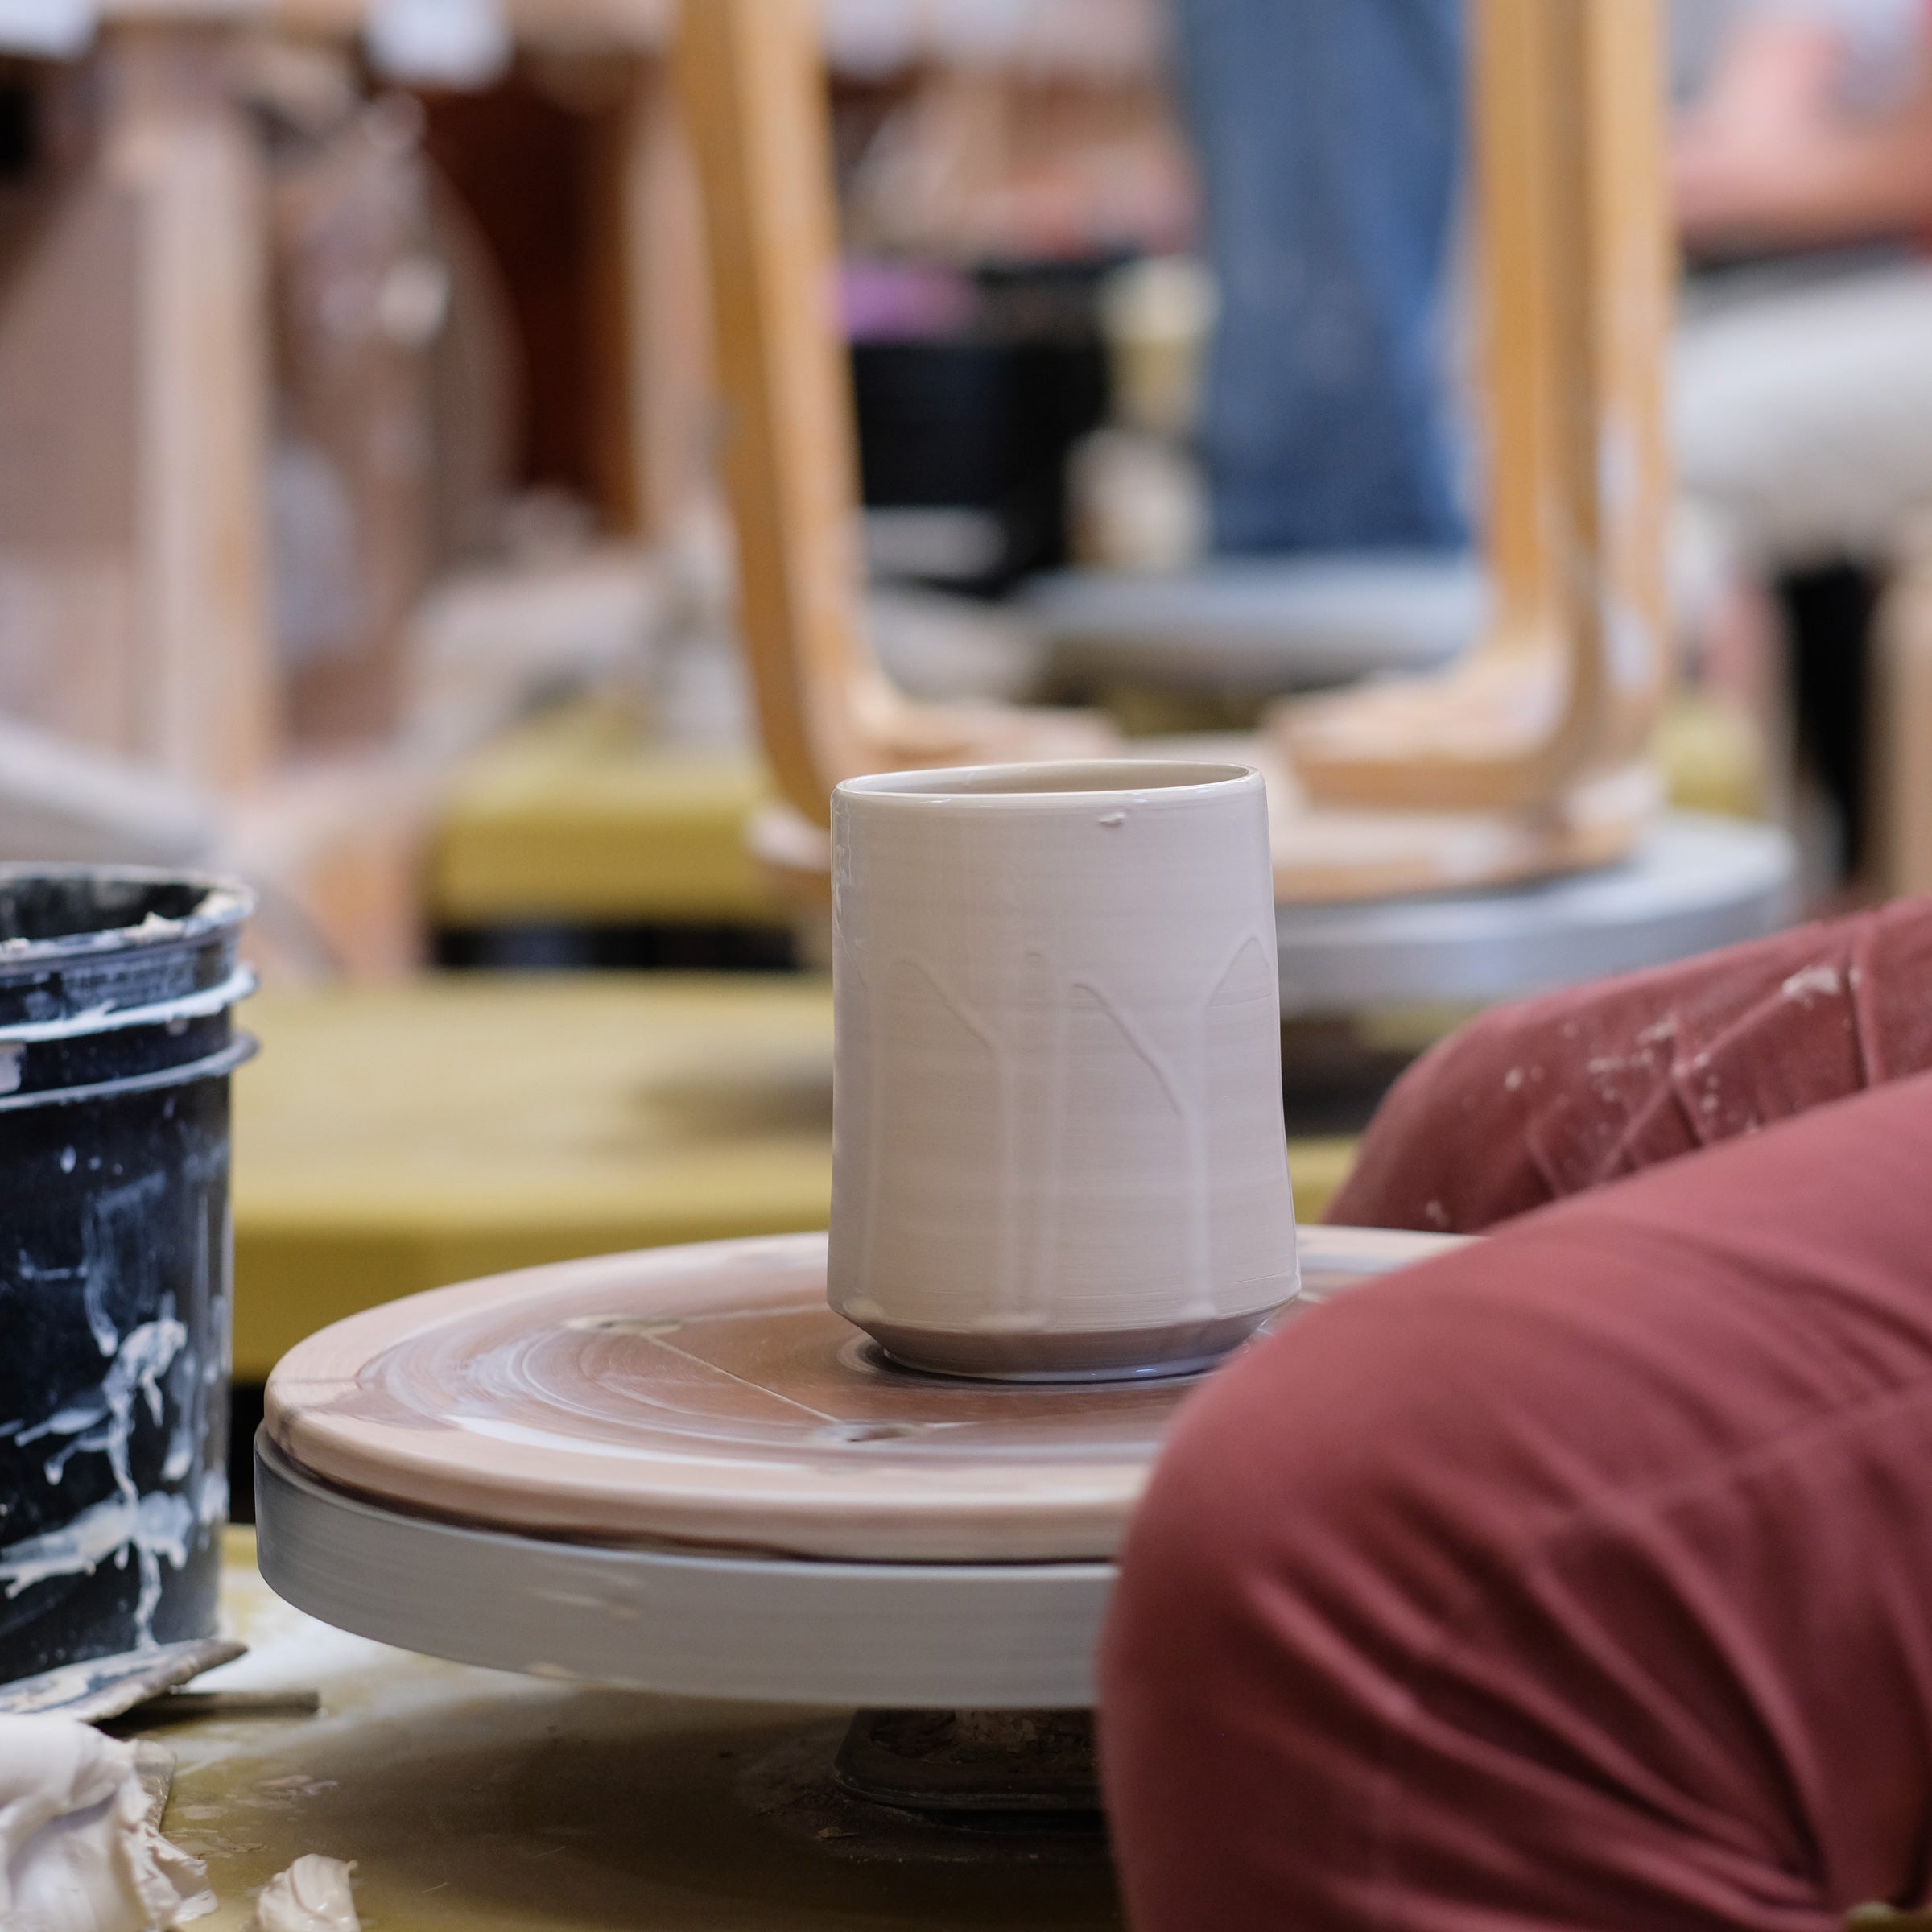 10 Best Paint Your Own Pottery Studios in Massachusetts!